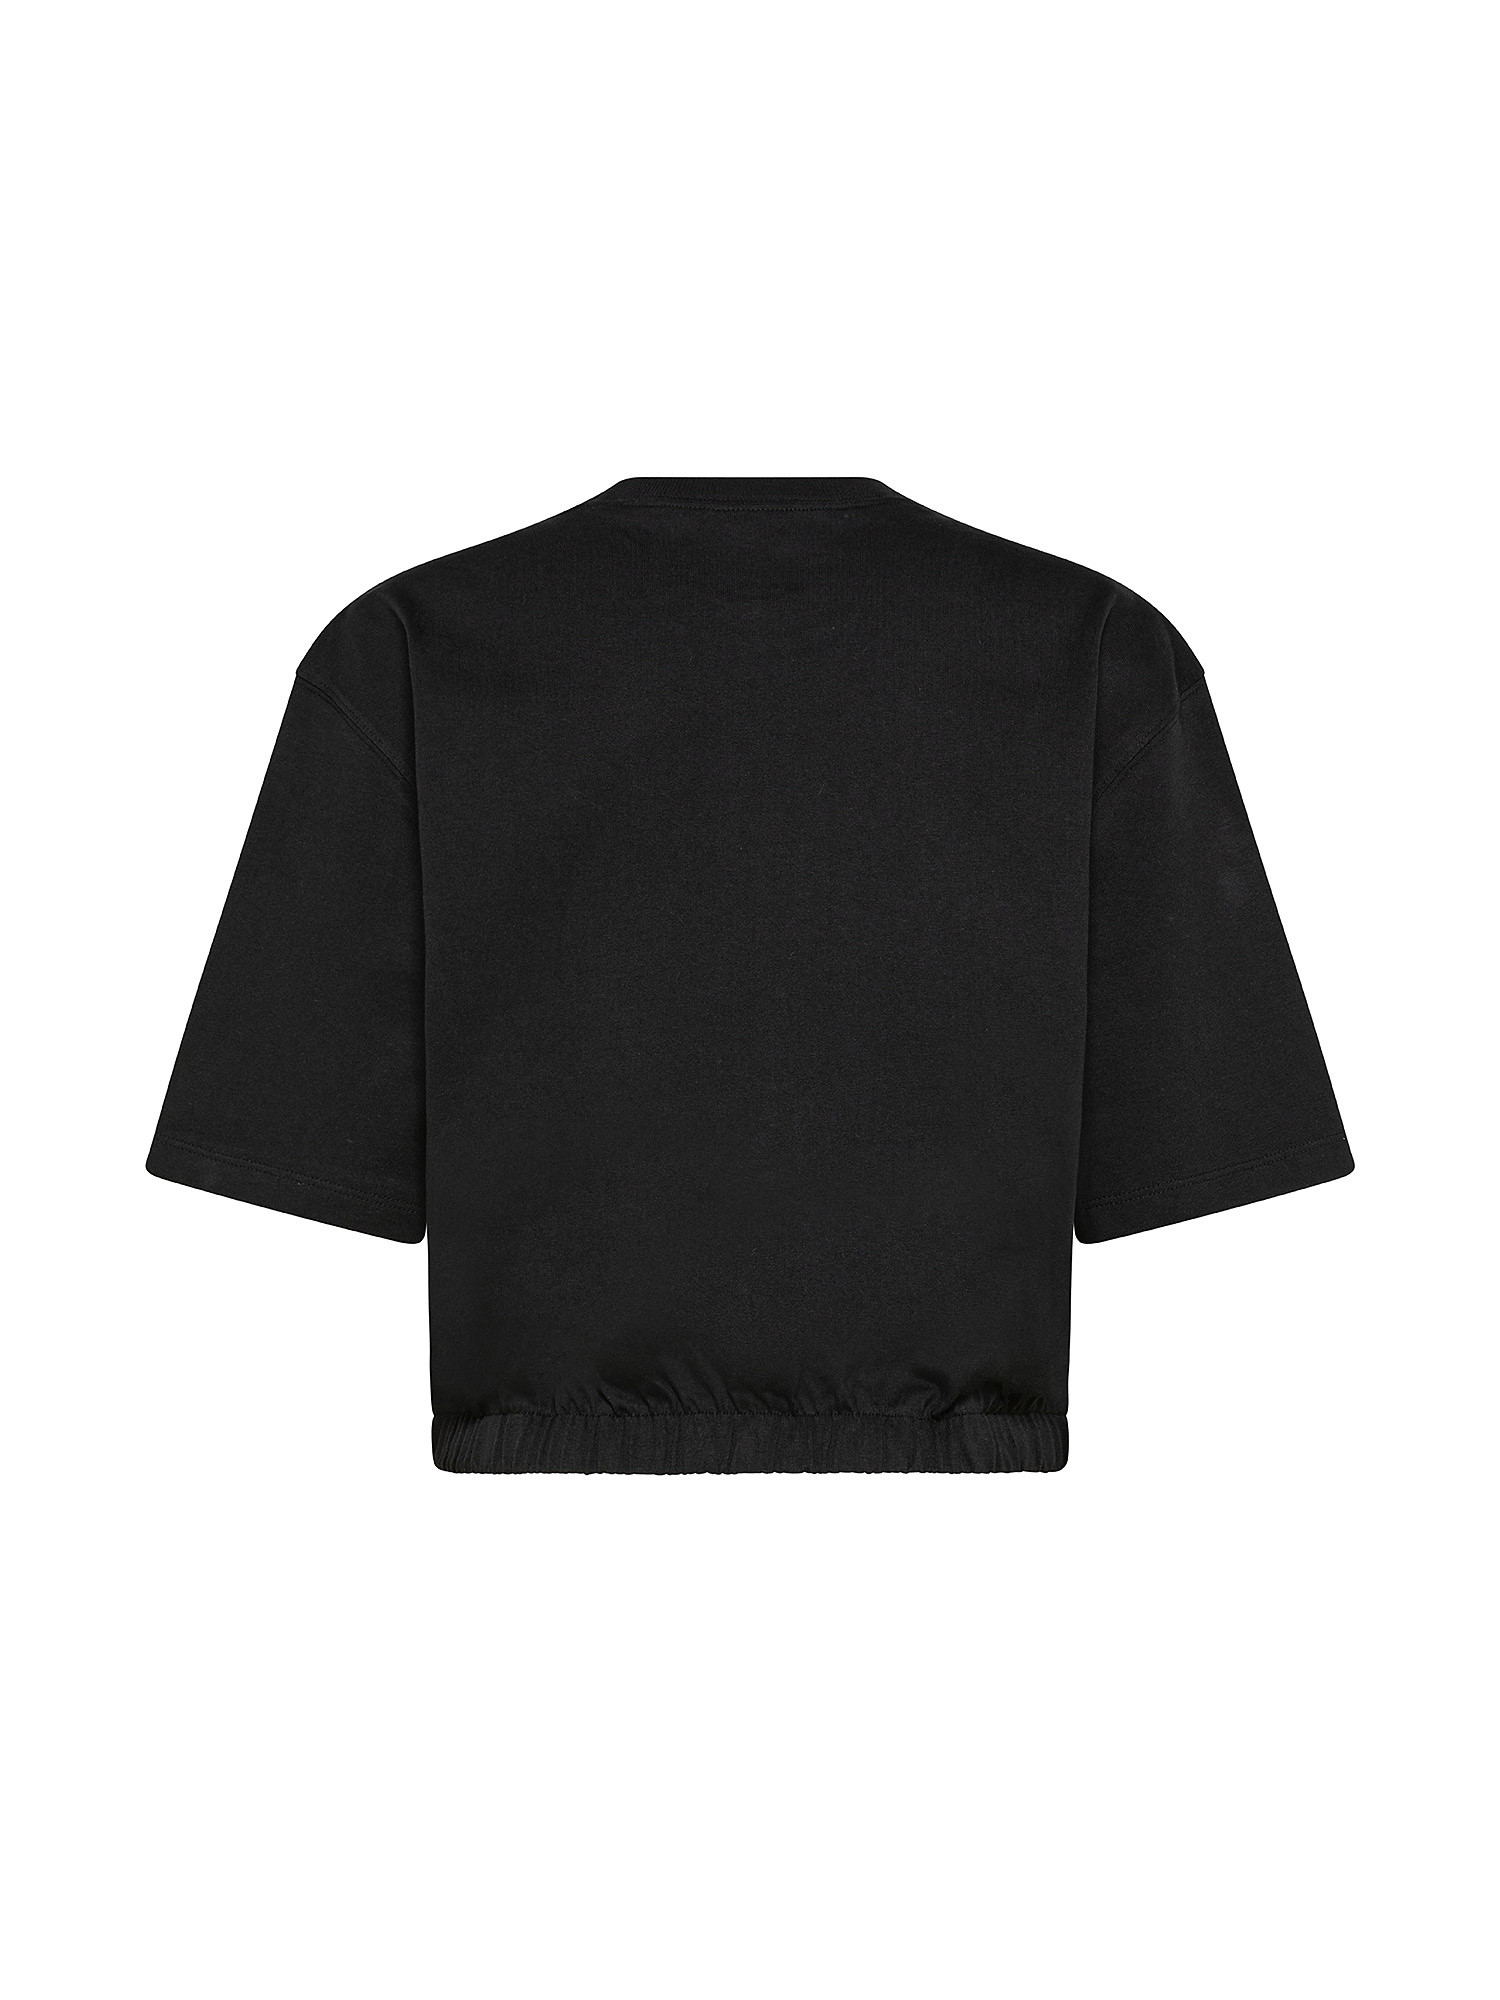 Adidas - T-shirt adicolor, Black, large image number 1